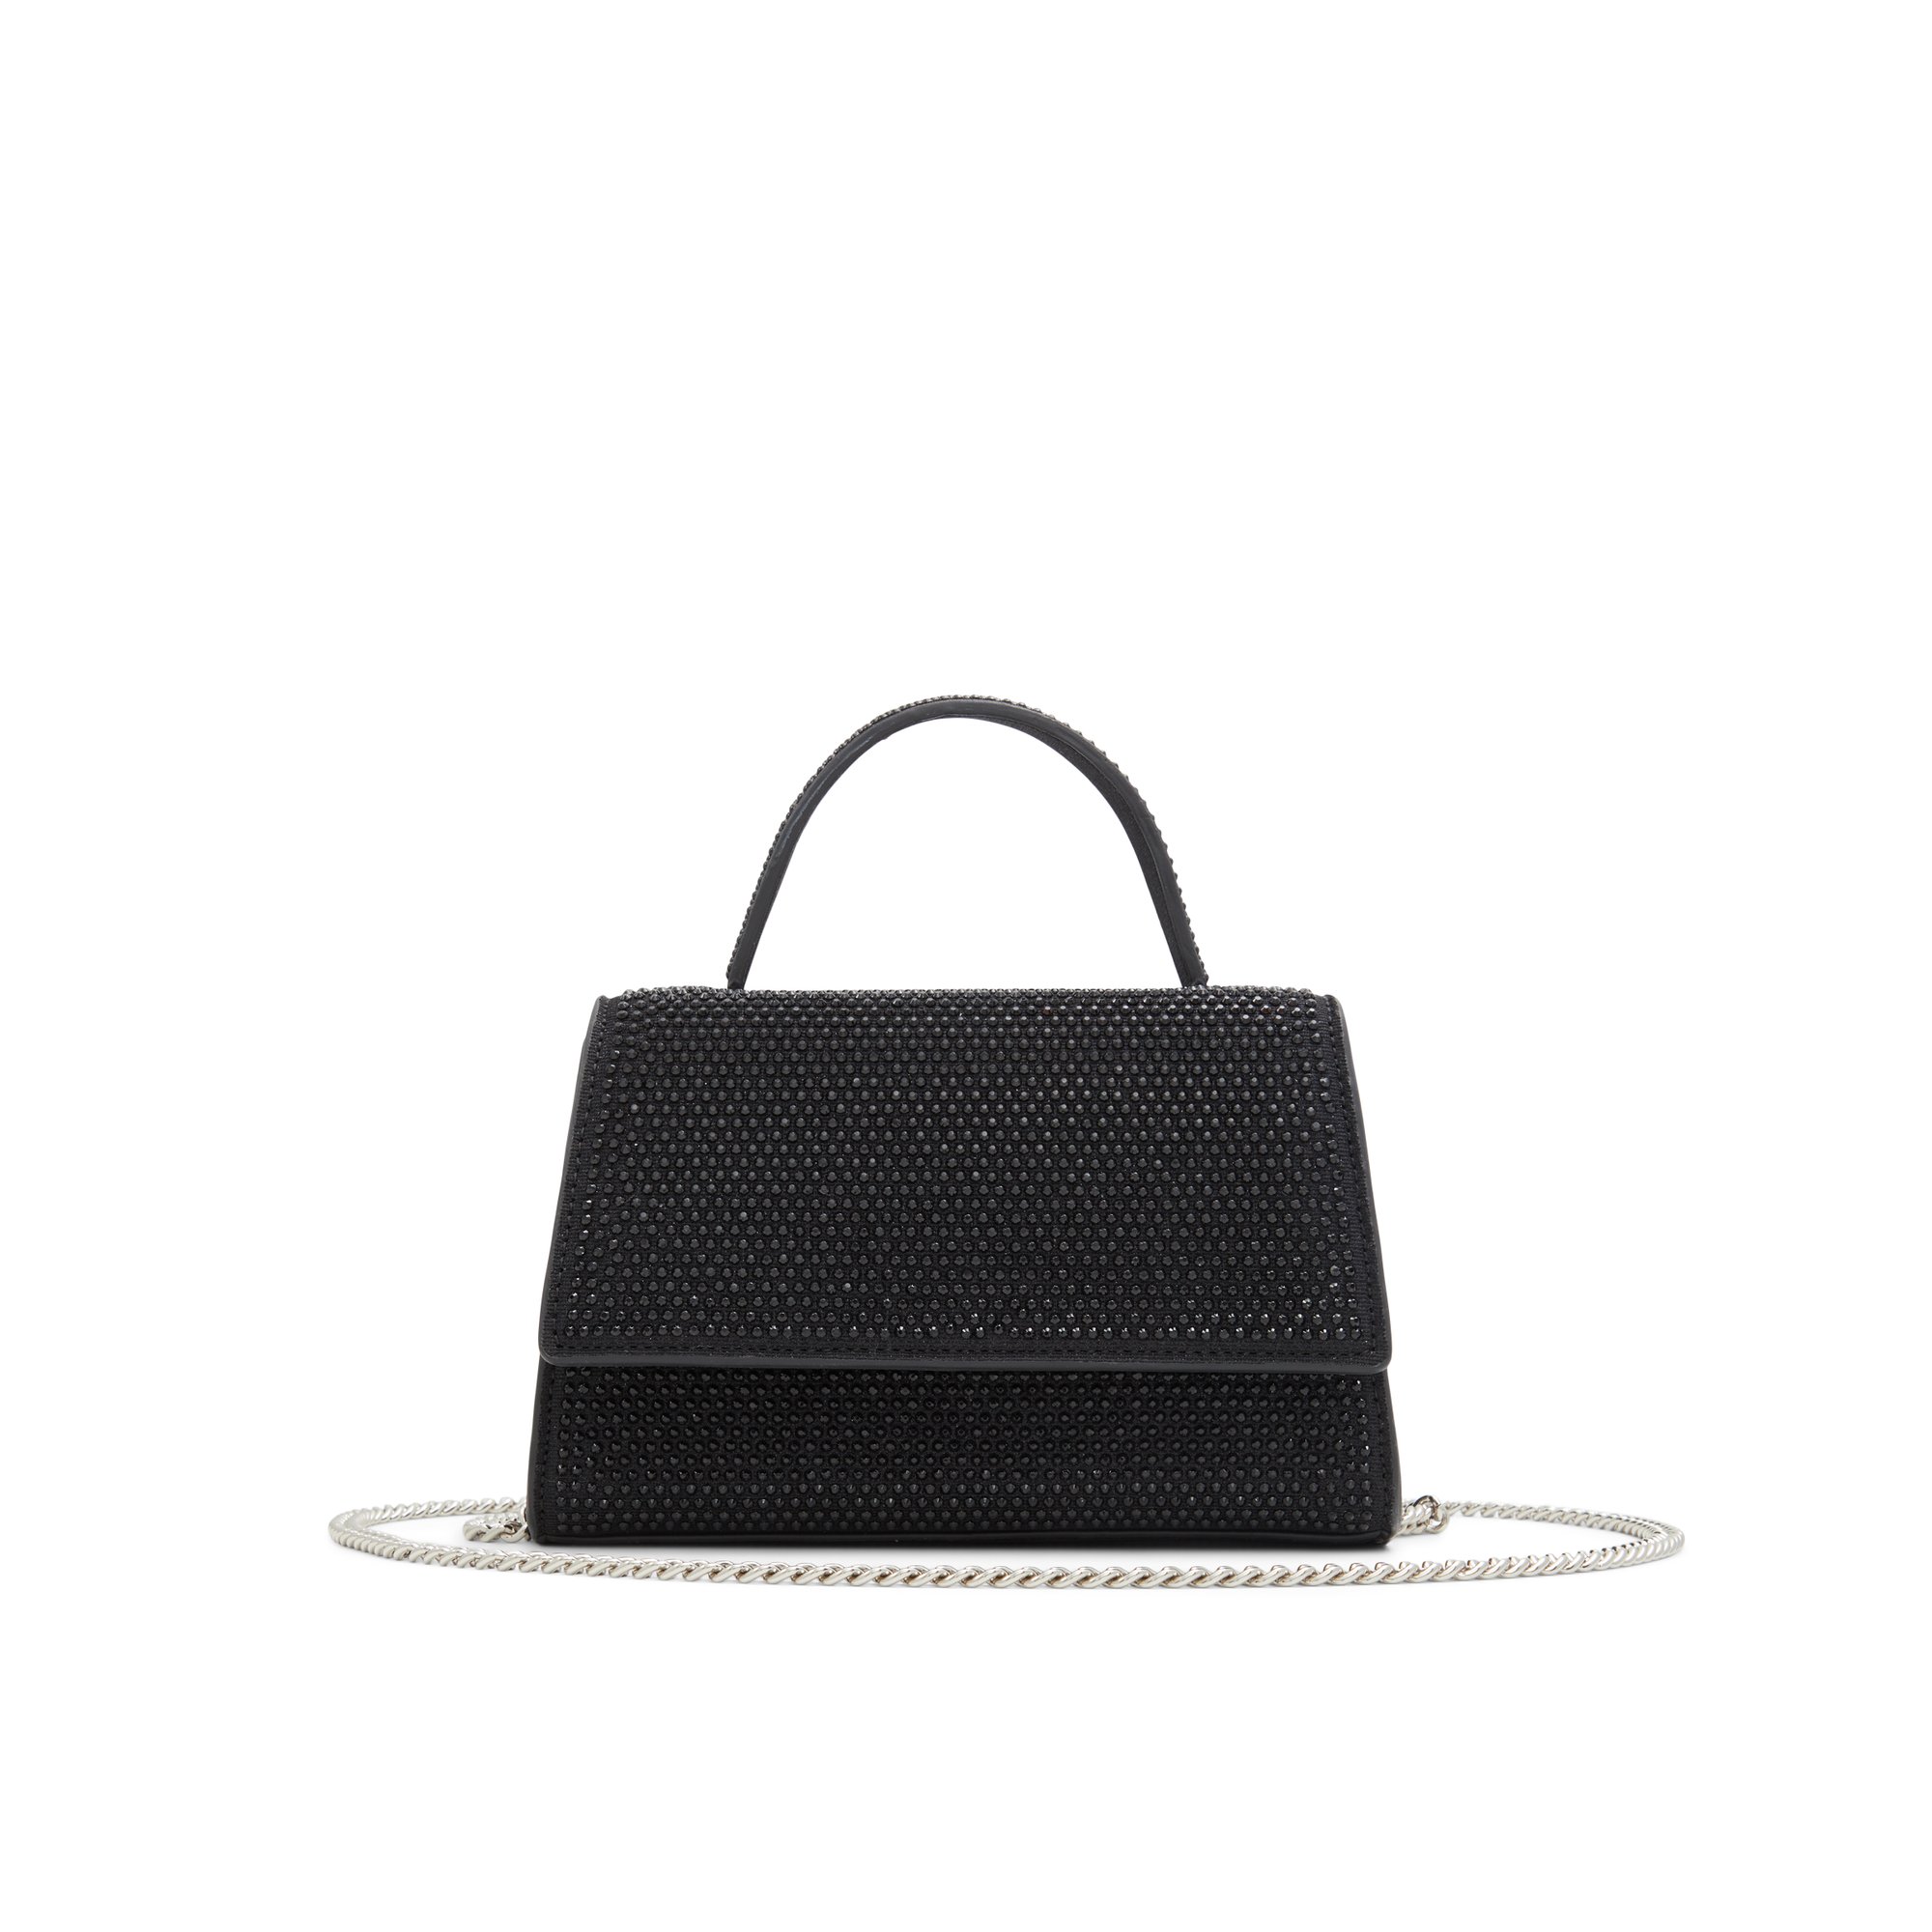 ALDO Meraeria - Women's Top Handle Handbag - Black